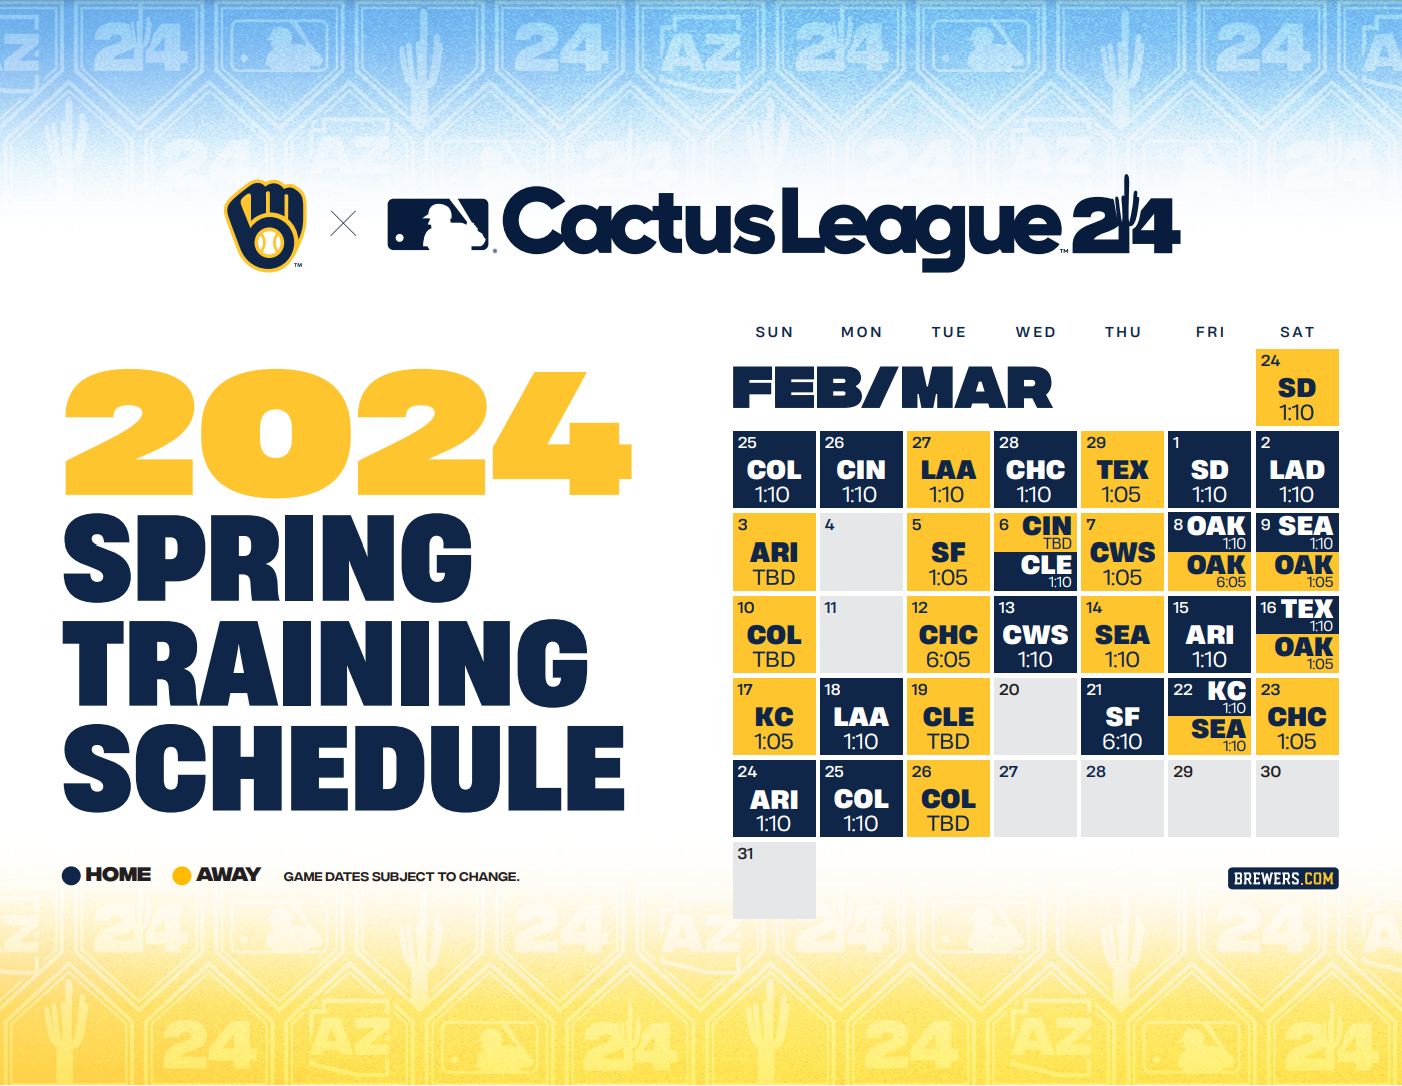 Brewers 2024 Cactus League schedule